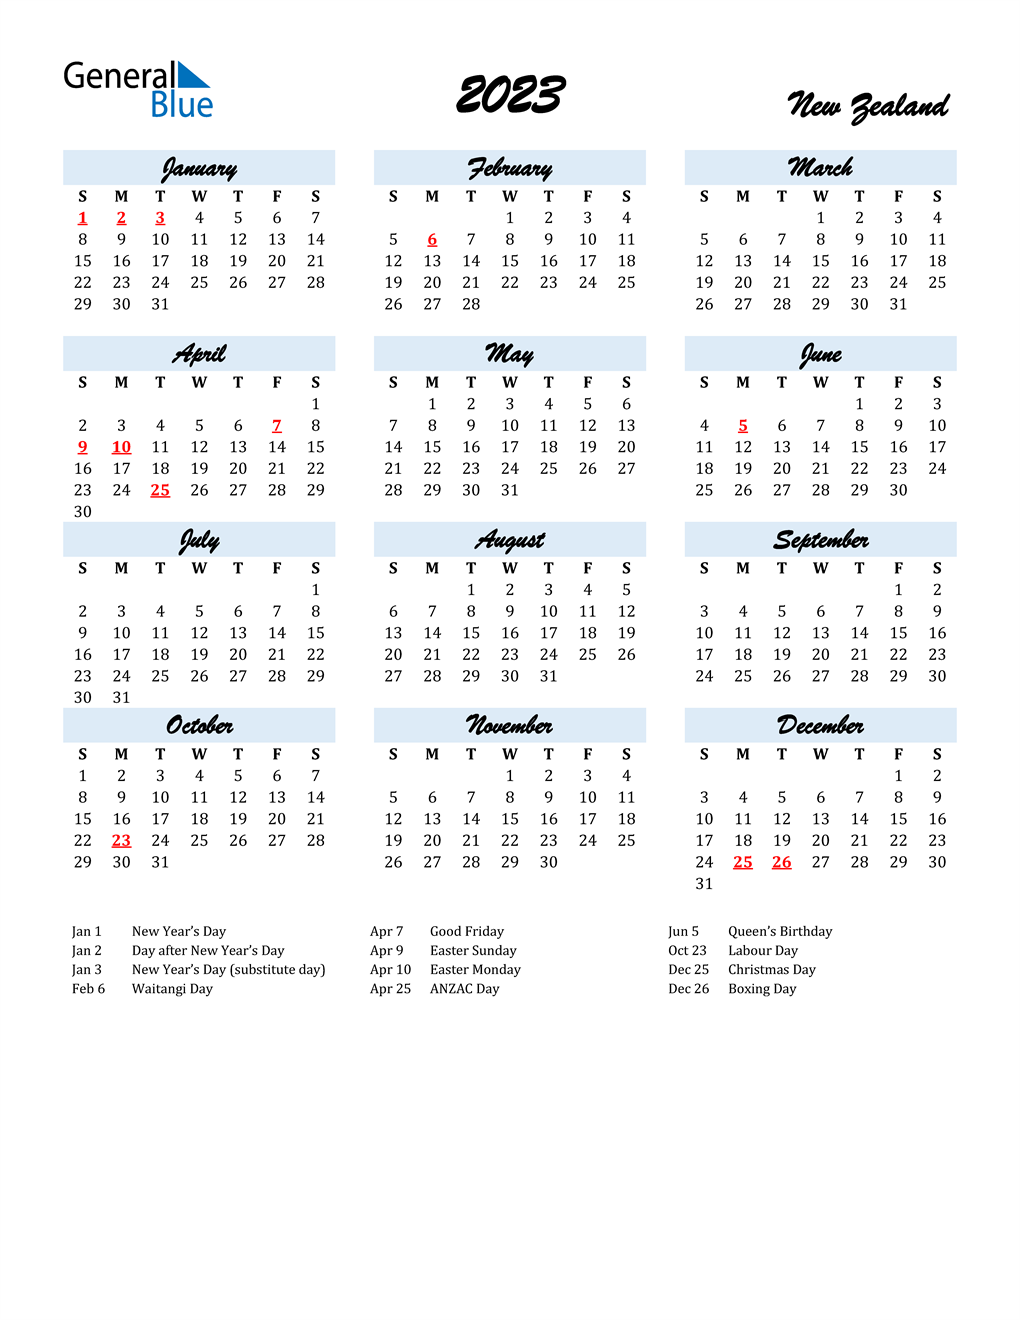 2023 New Zealand Calendar With Holidays 2023 New Zealand Calendar With Holidays Thaddeus Tanner 1029